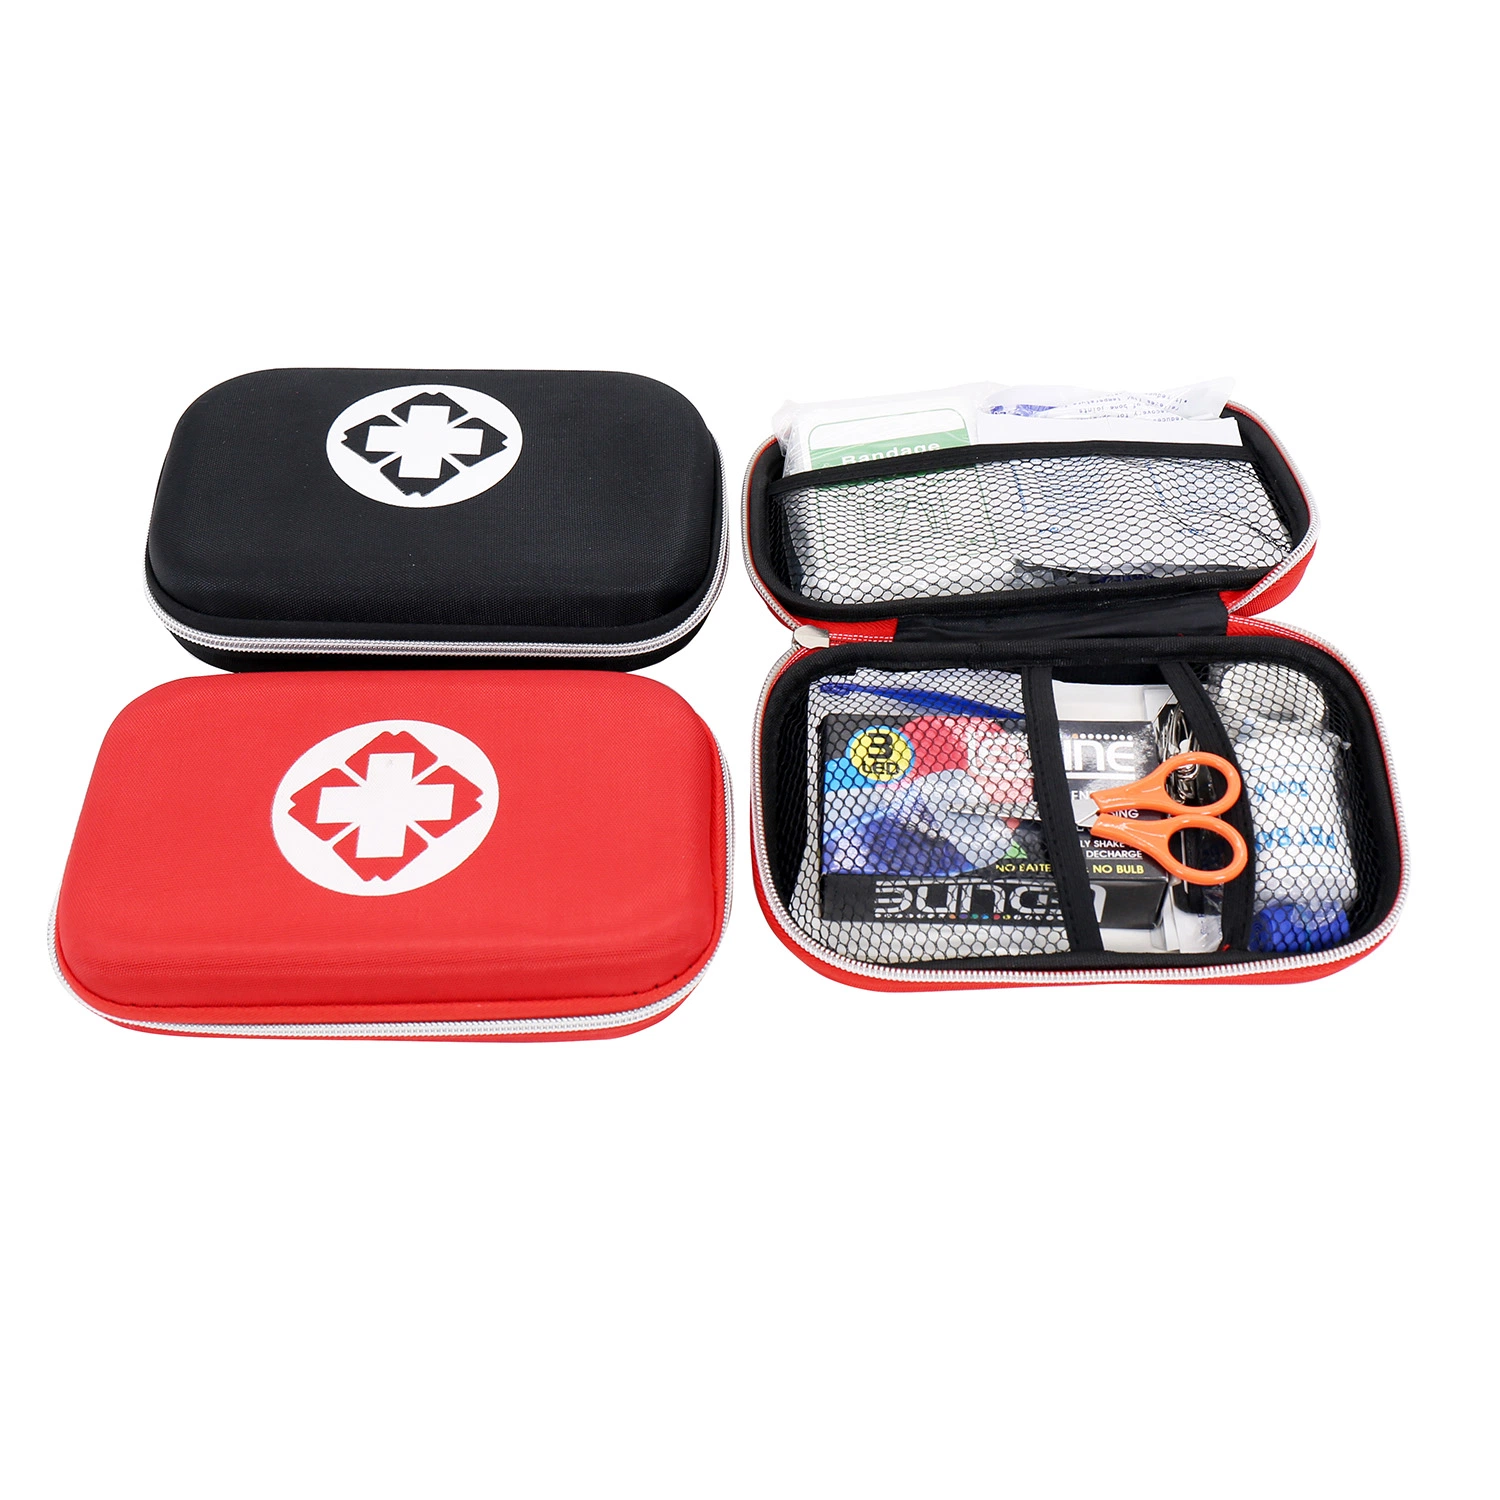 FDA ISO Ce OEM Original Factory Hot Sale Custom Home Emergency Portable First Aid Kit